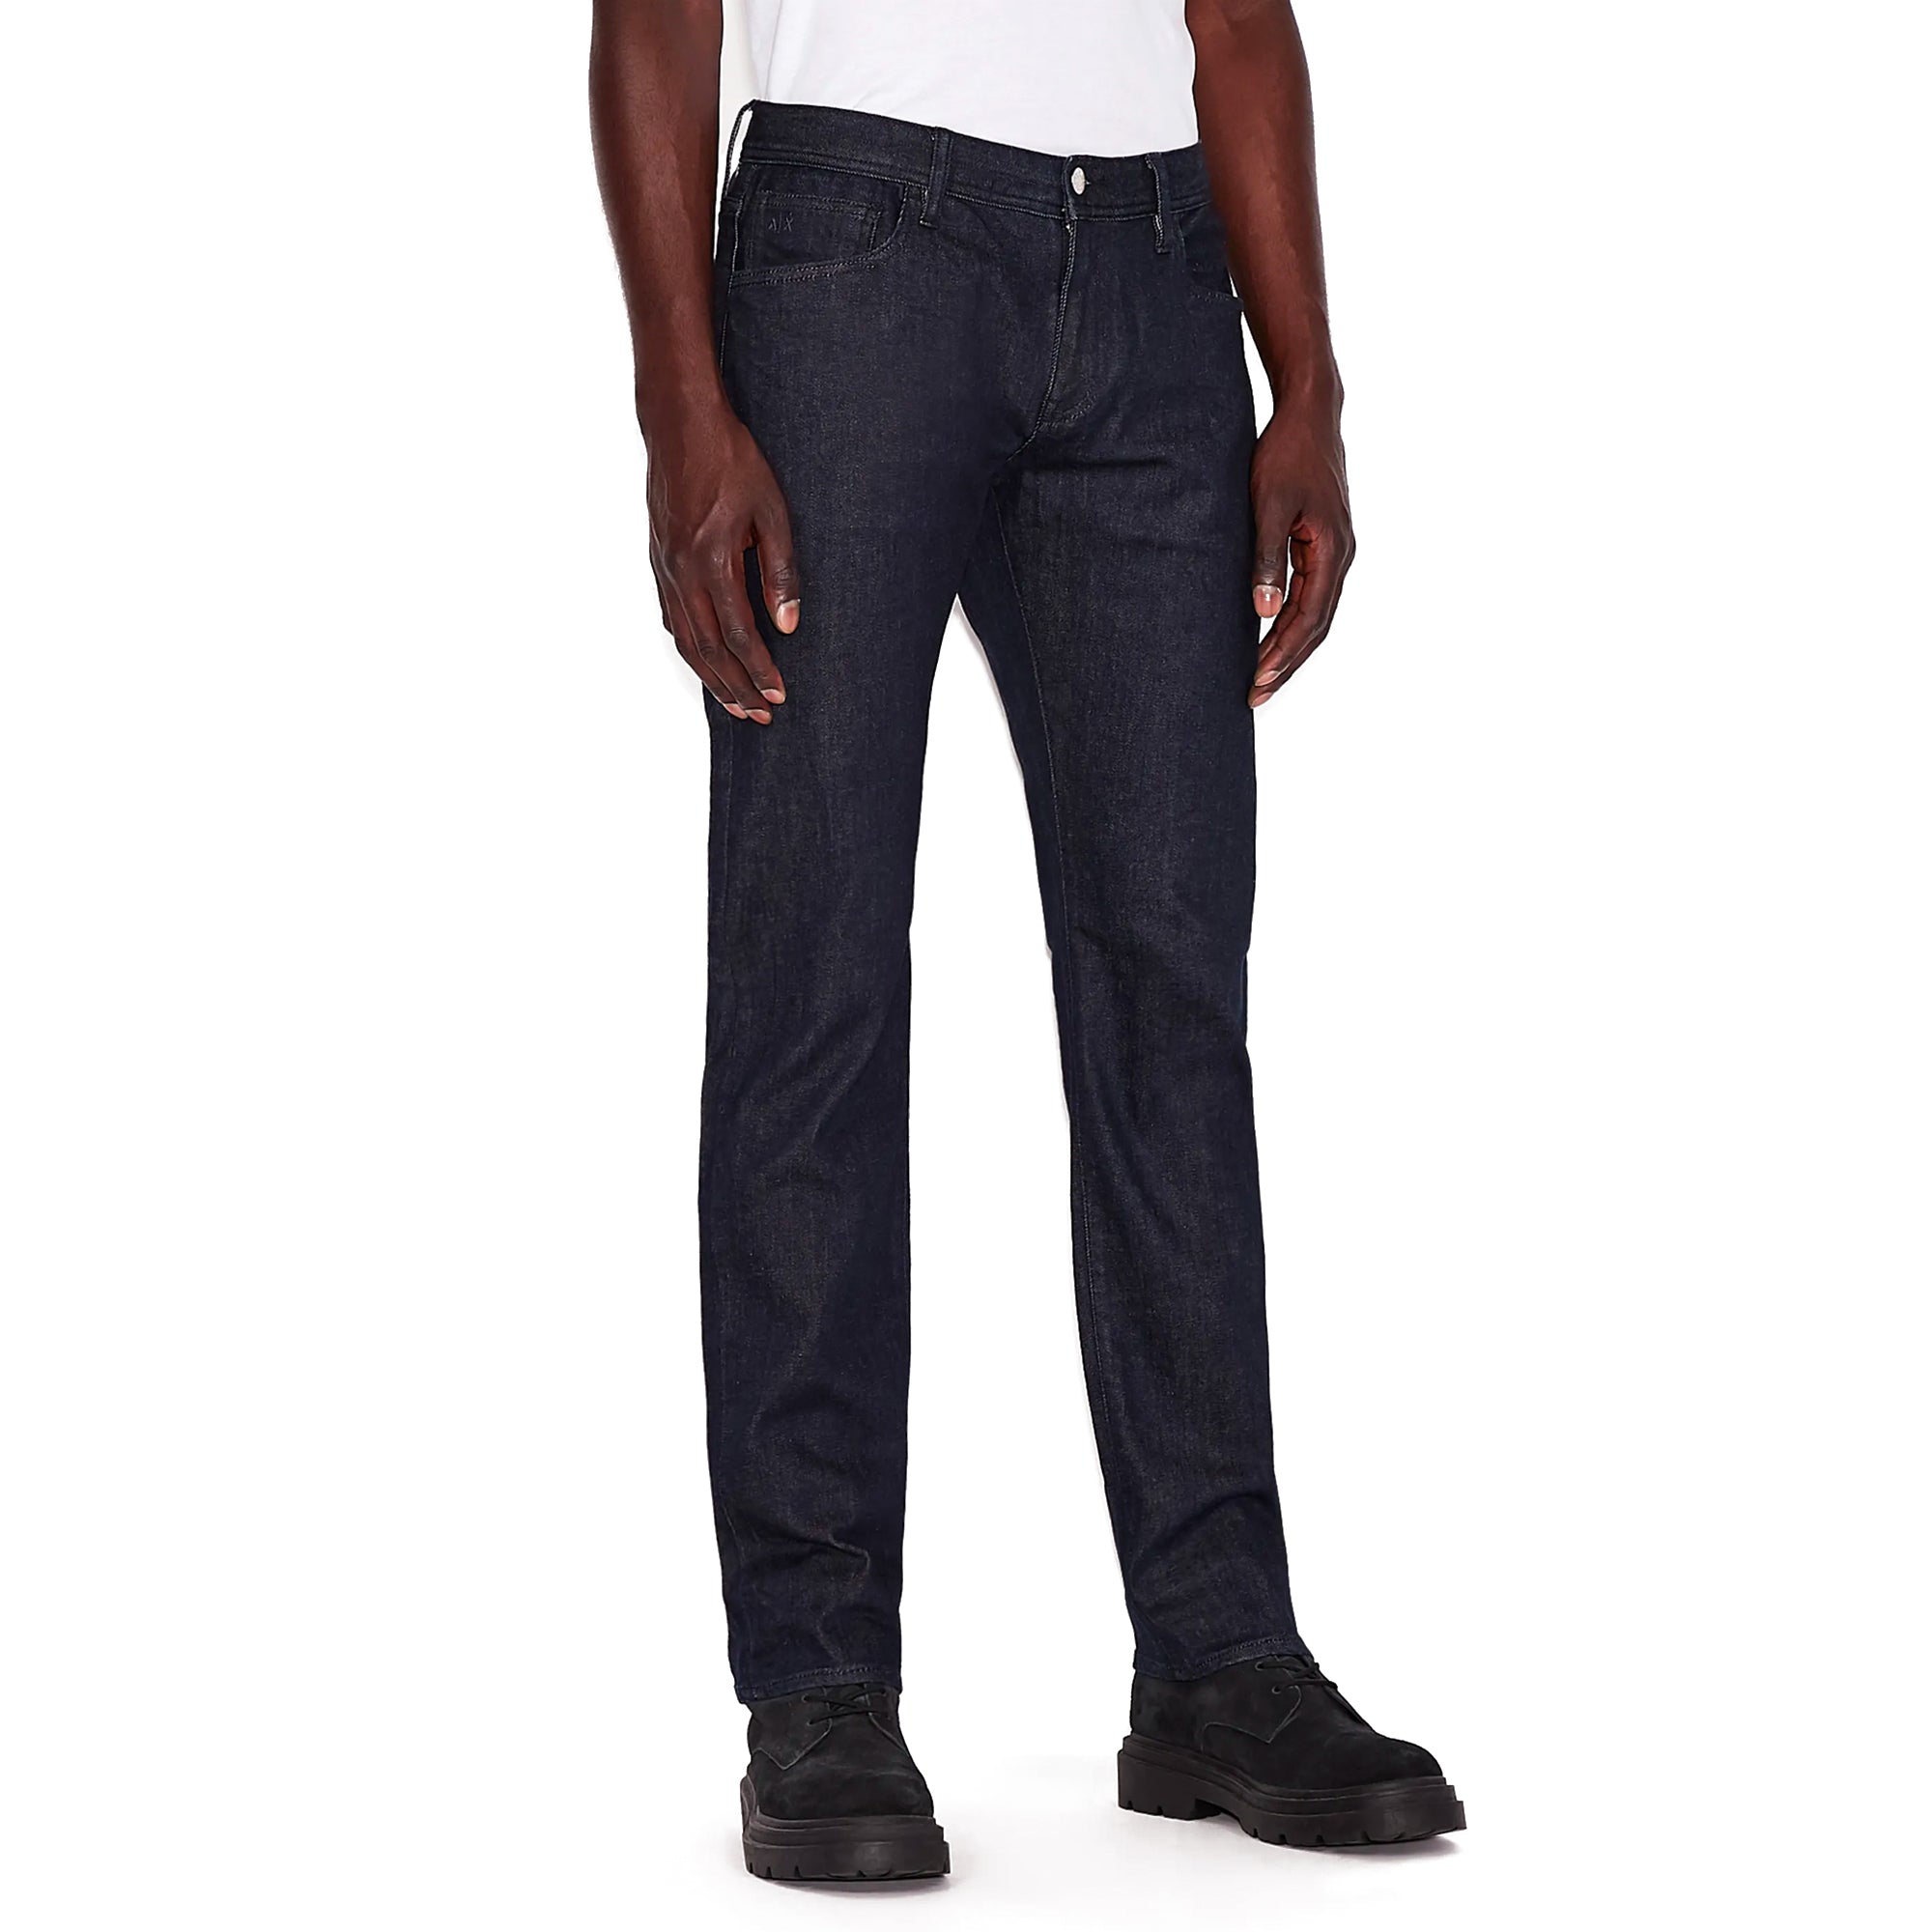 Armani Exchange J13 Slim Fit Jeans - Dark Blue Indigo Rinse